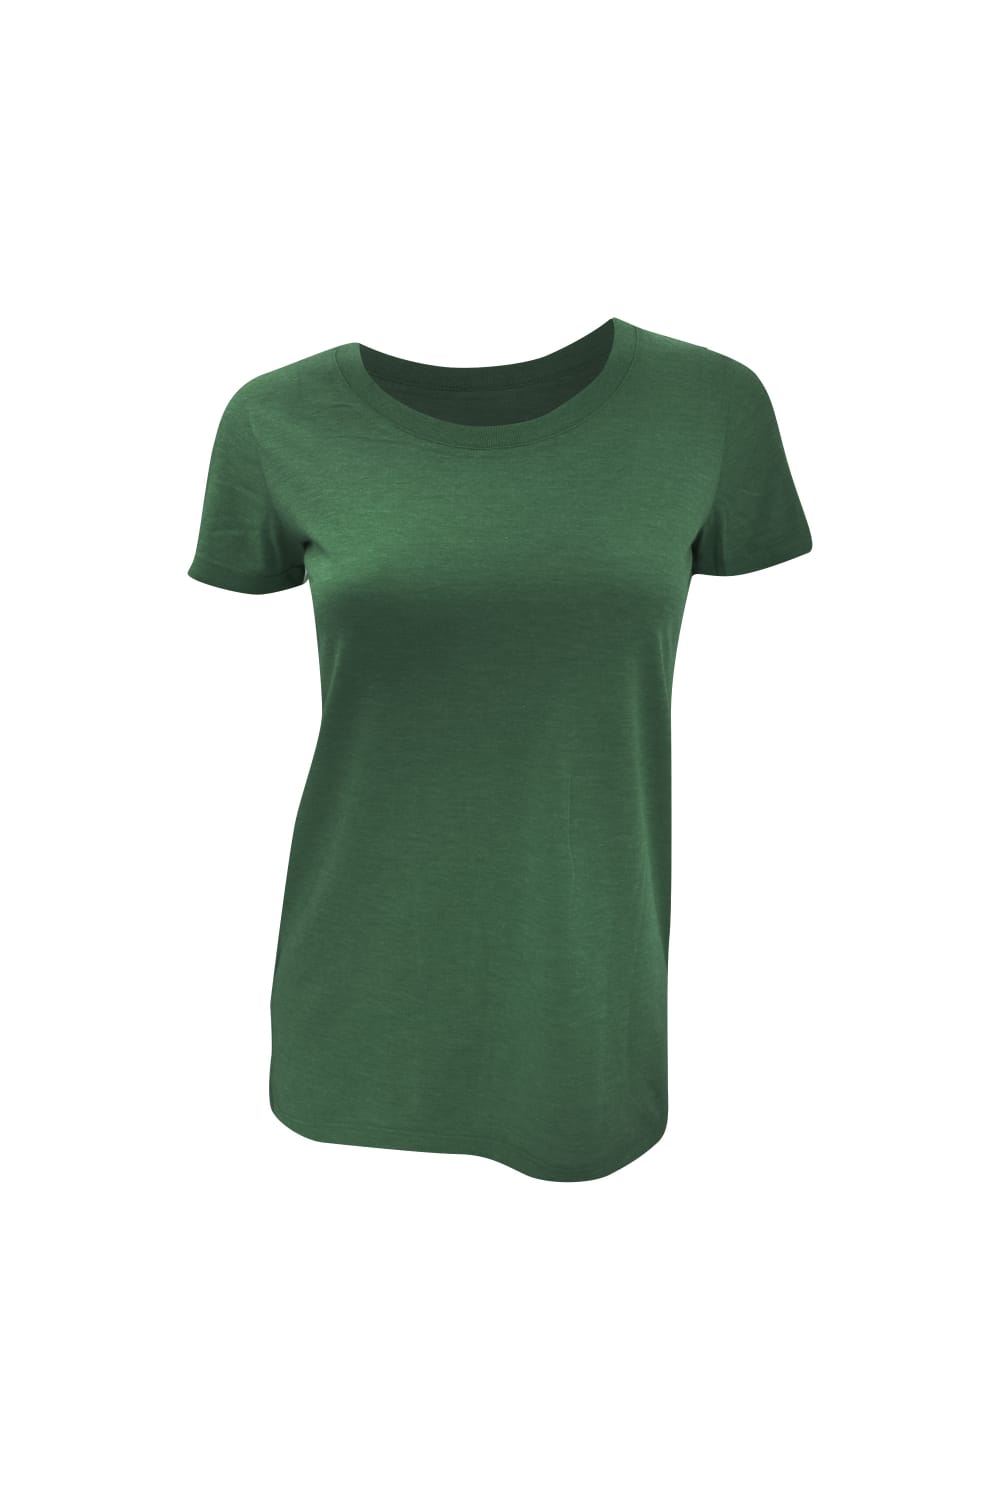 Bella Ladies/Womens Triblend Crew Neck T-Shirt (Emerald Triblend)